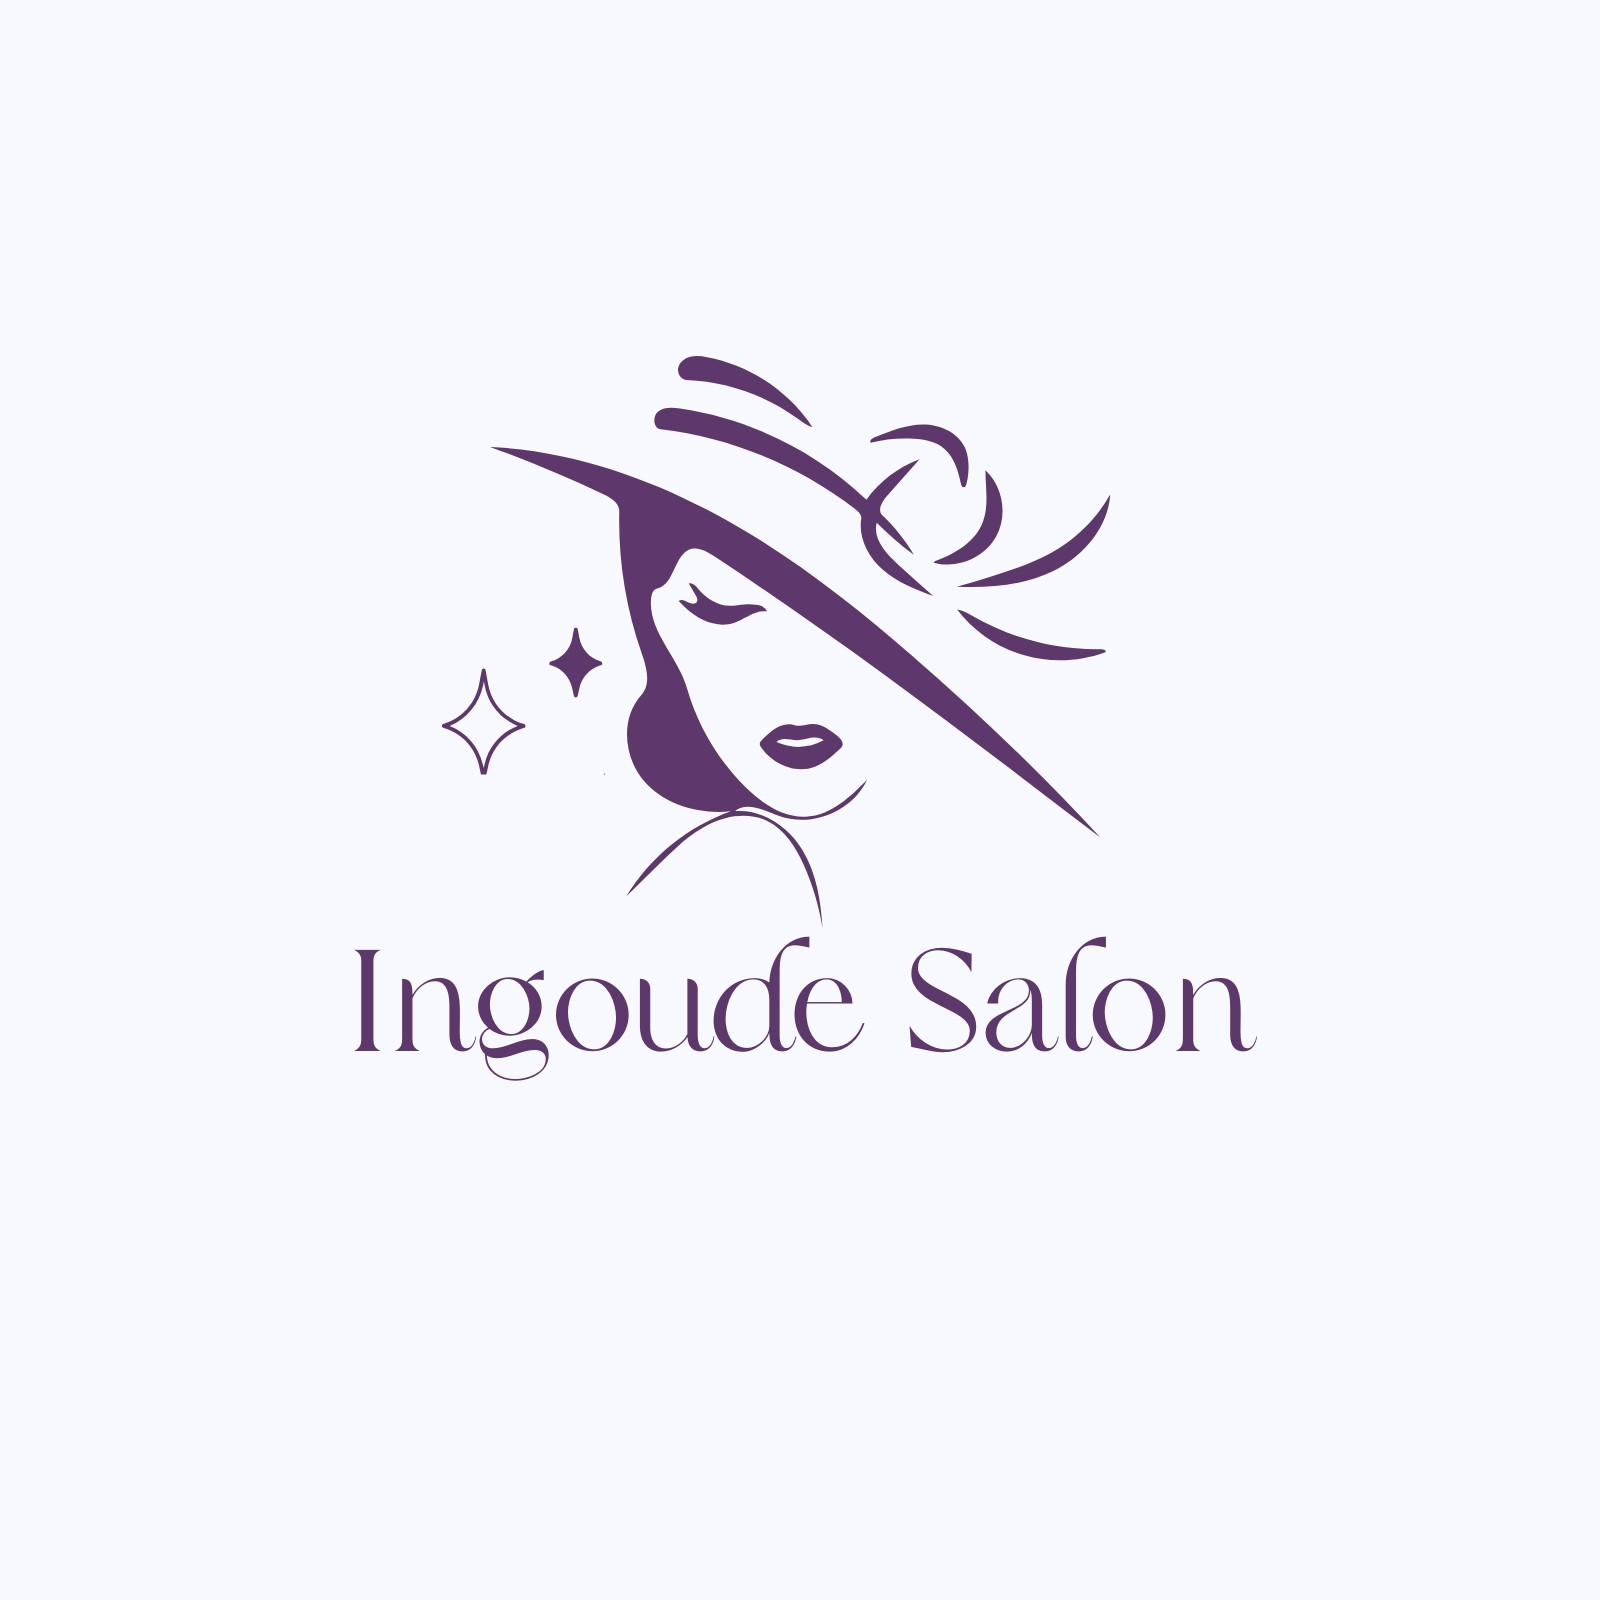 62 icon packs of hair salon | Hair salon logos, Hair salon design, Salon  logo